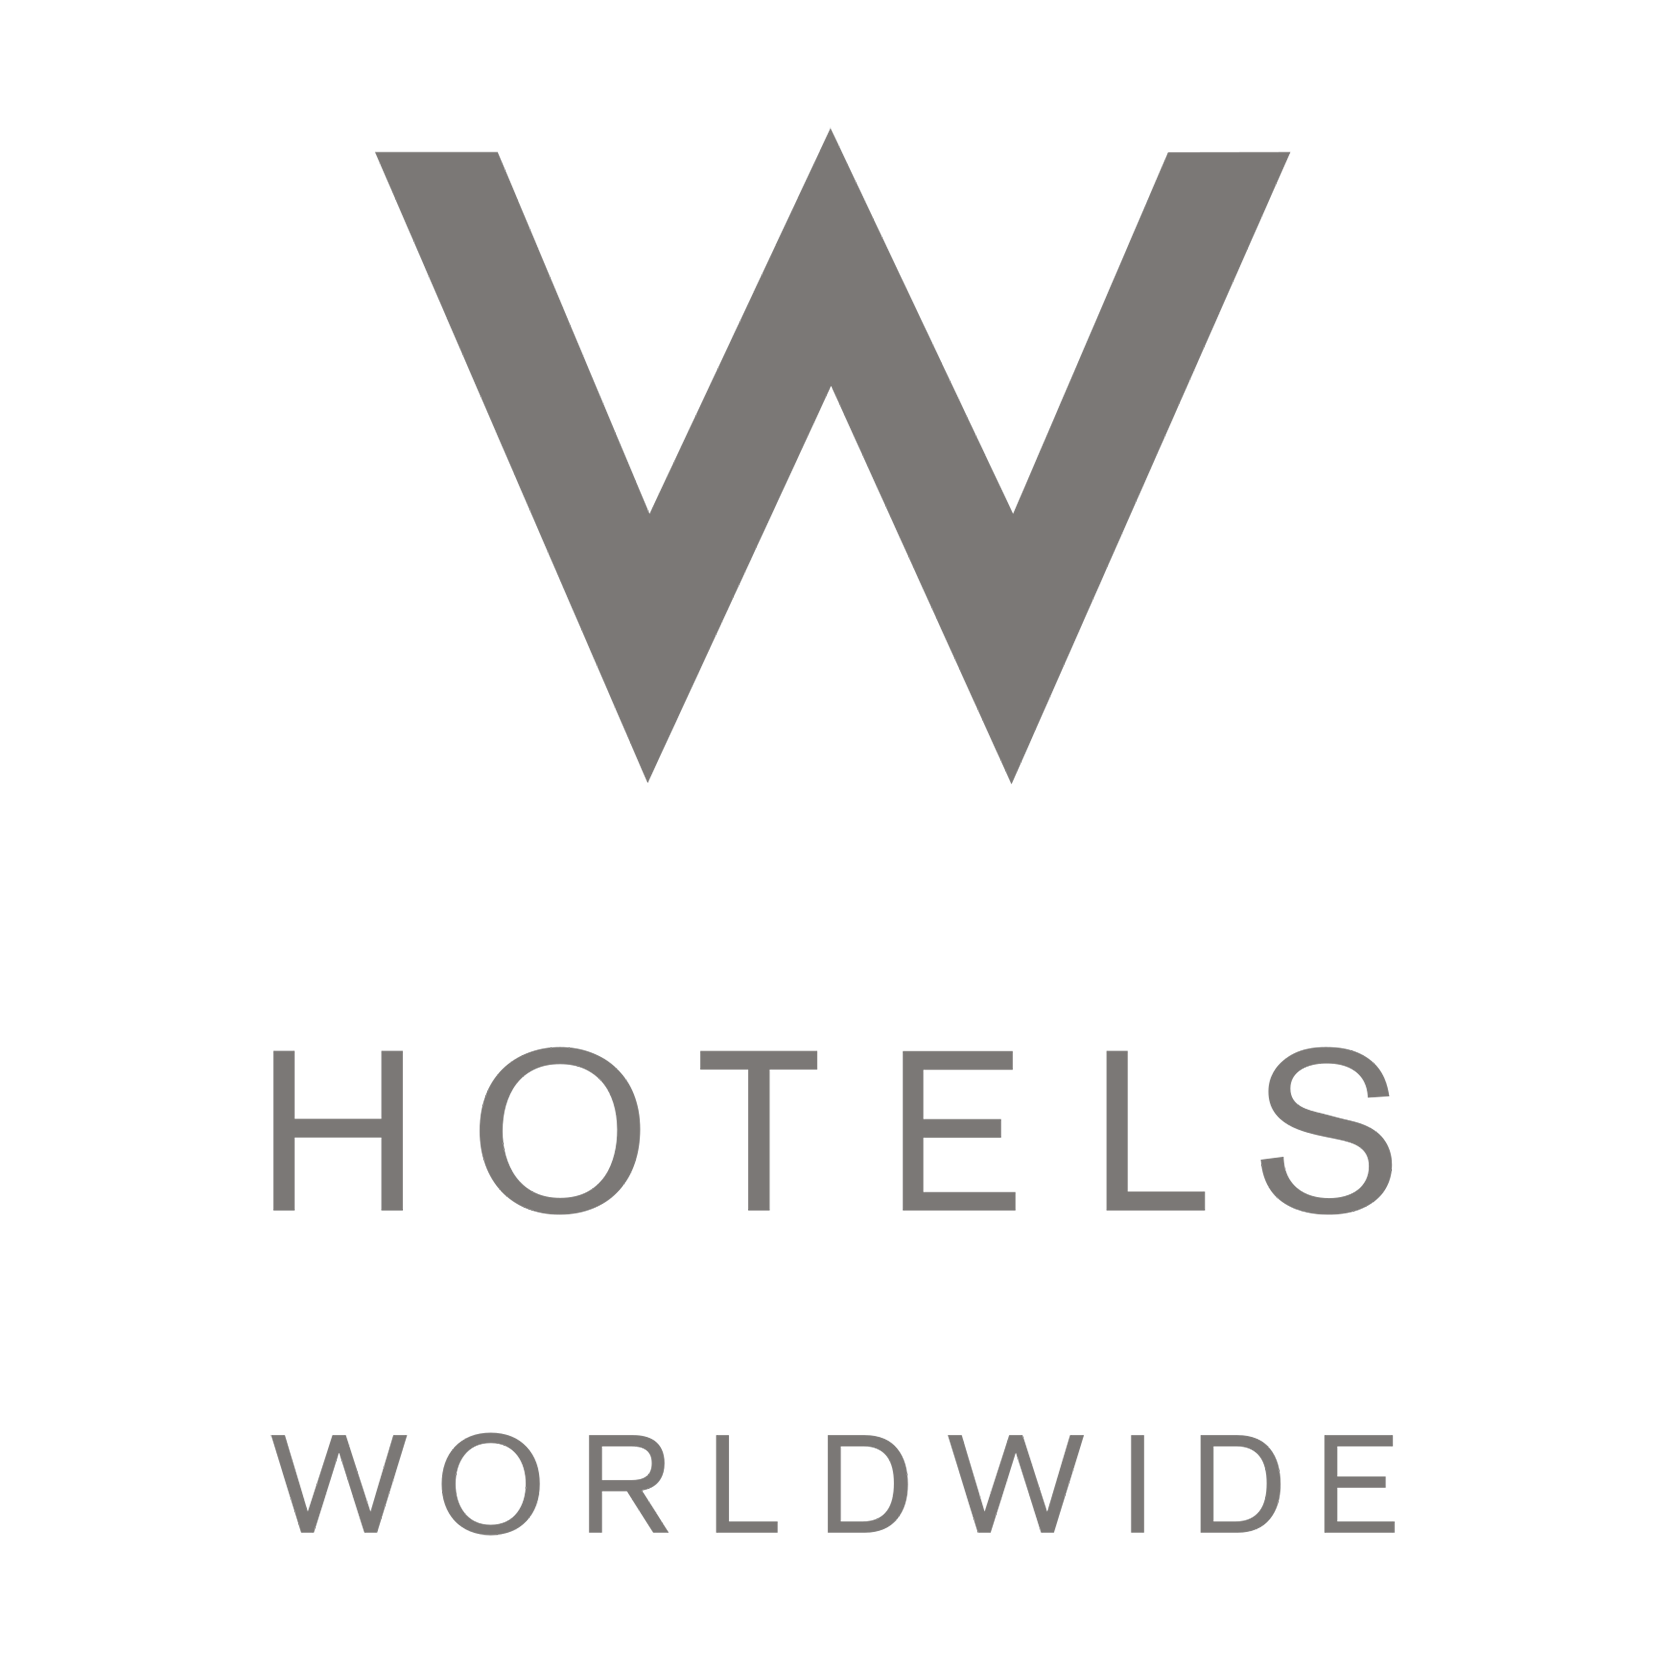 Hotelwordwide